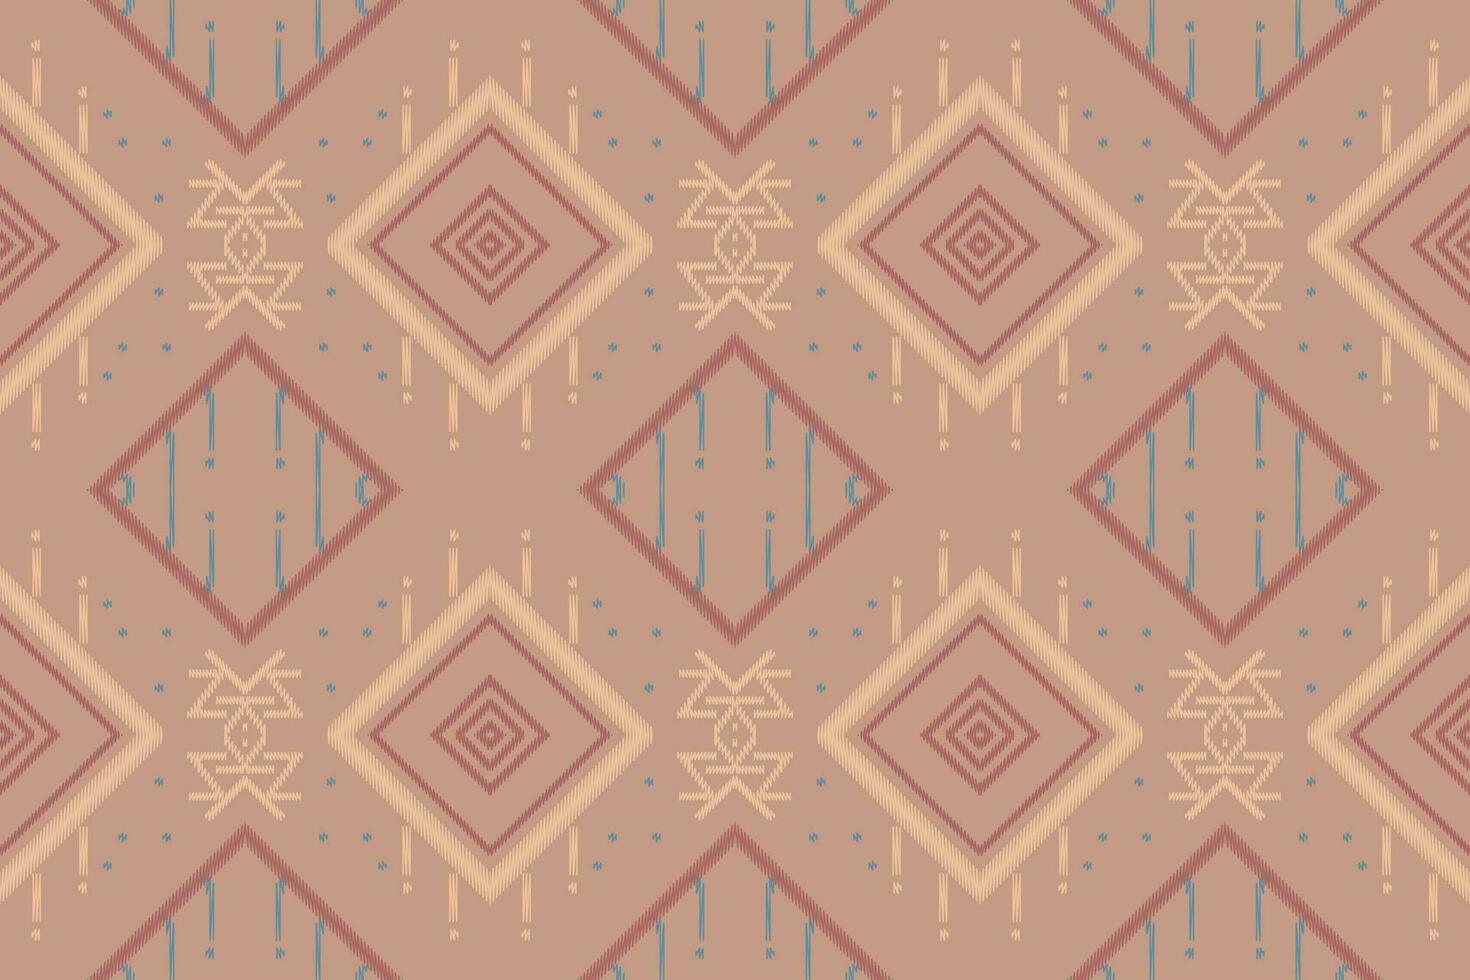 inföding mönster amerikan stam- indisk prydnad mönster geometrisk etnisk textil- textur stam- aztec mönster navajo mexikansk tyg sömlös vektor dekoration mode